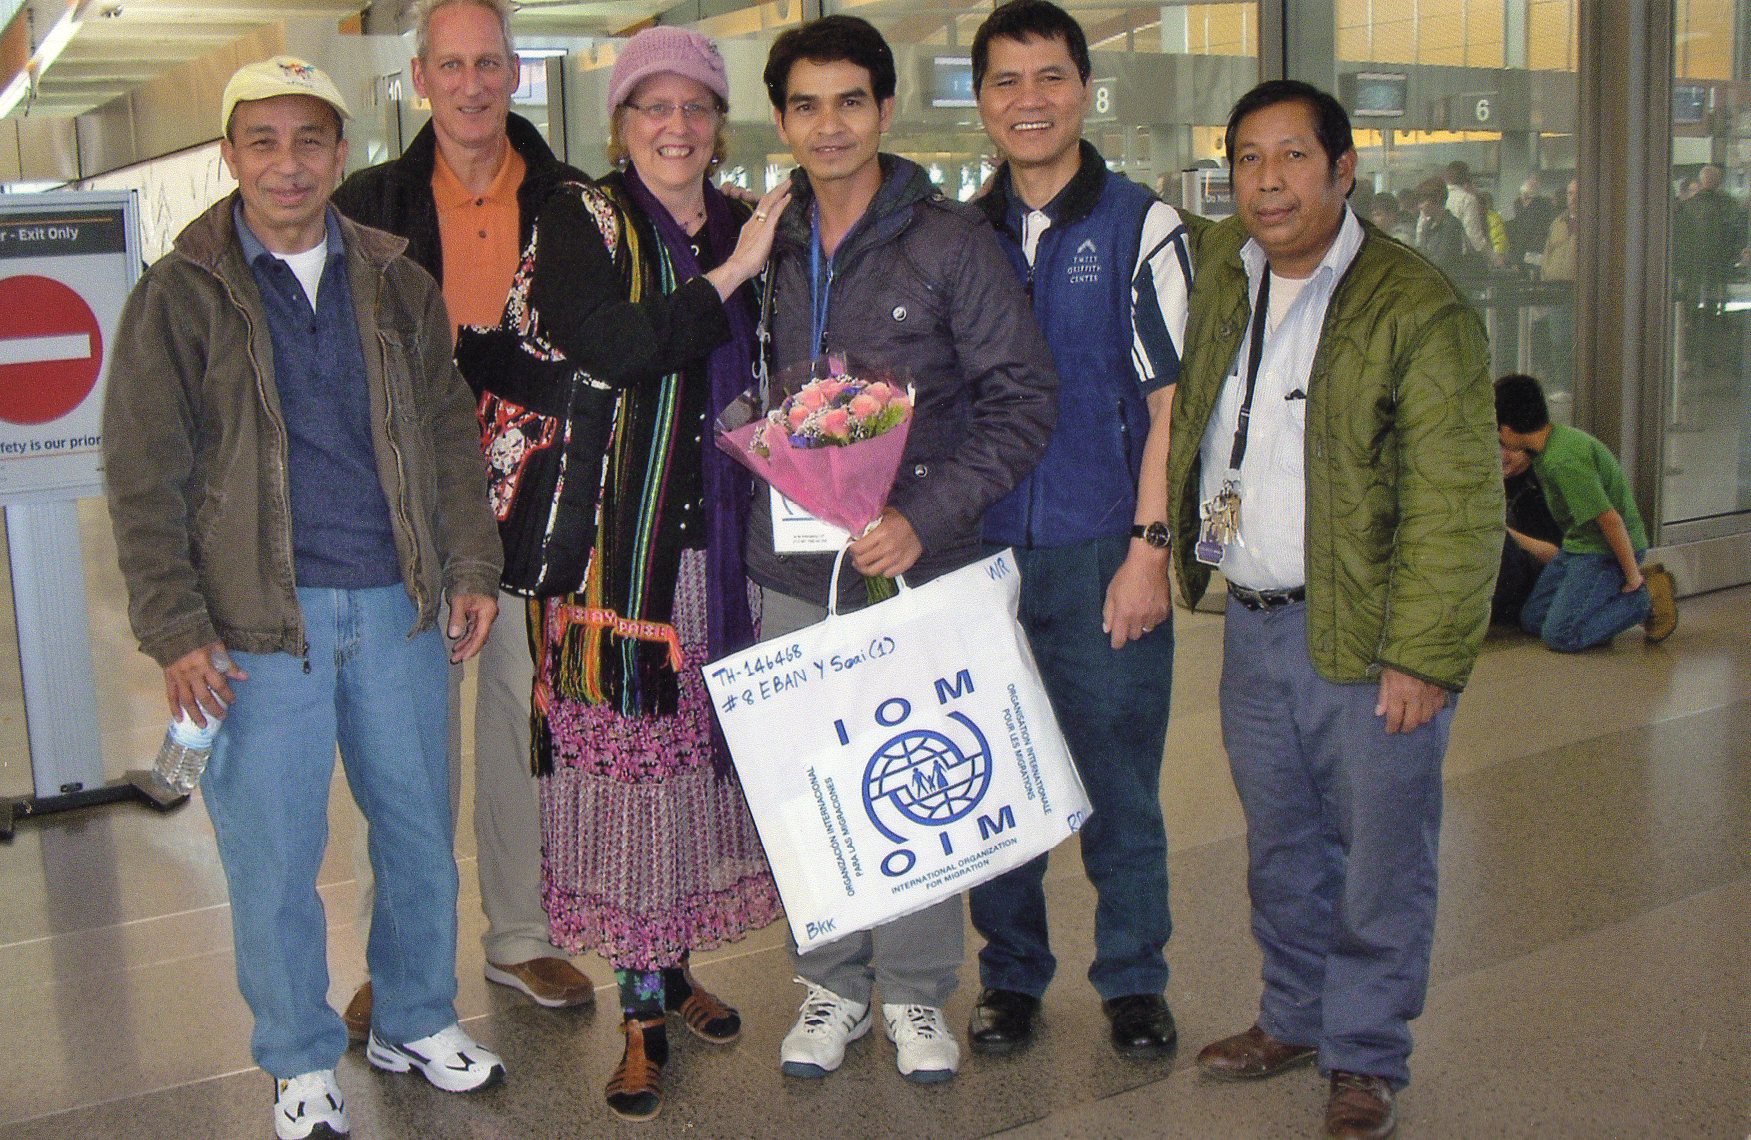 photo Y Suai with friends RDU NC USA airport Feb. 9 2012